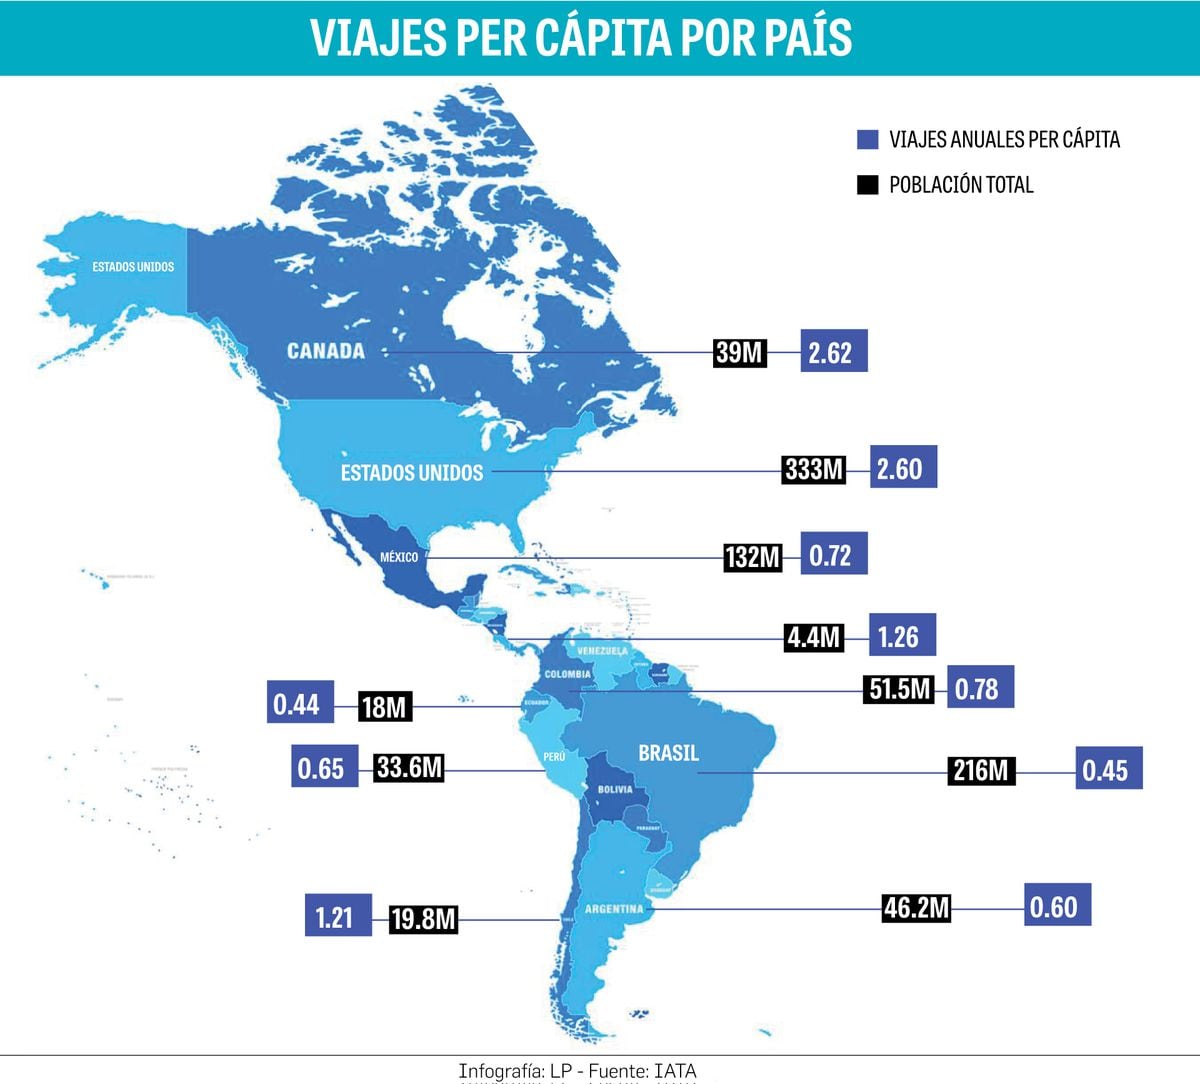 Panamá lidera en viajes aéreos per cápita en América Latina